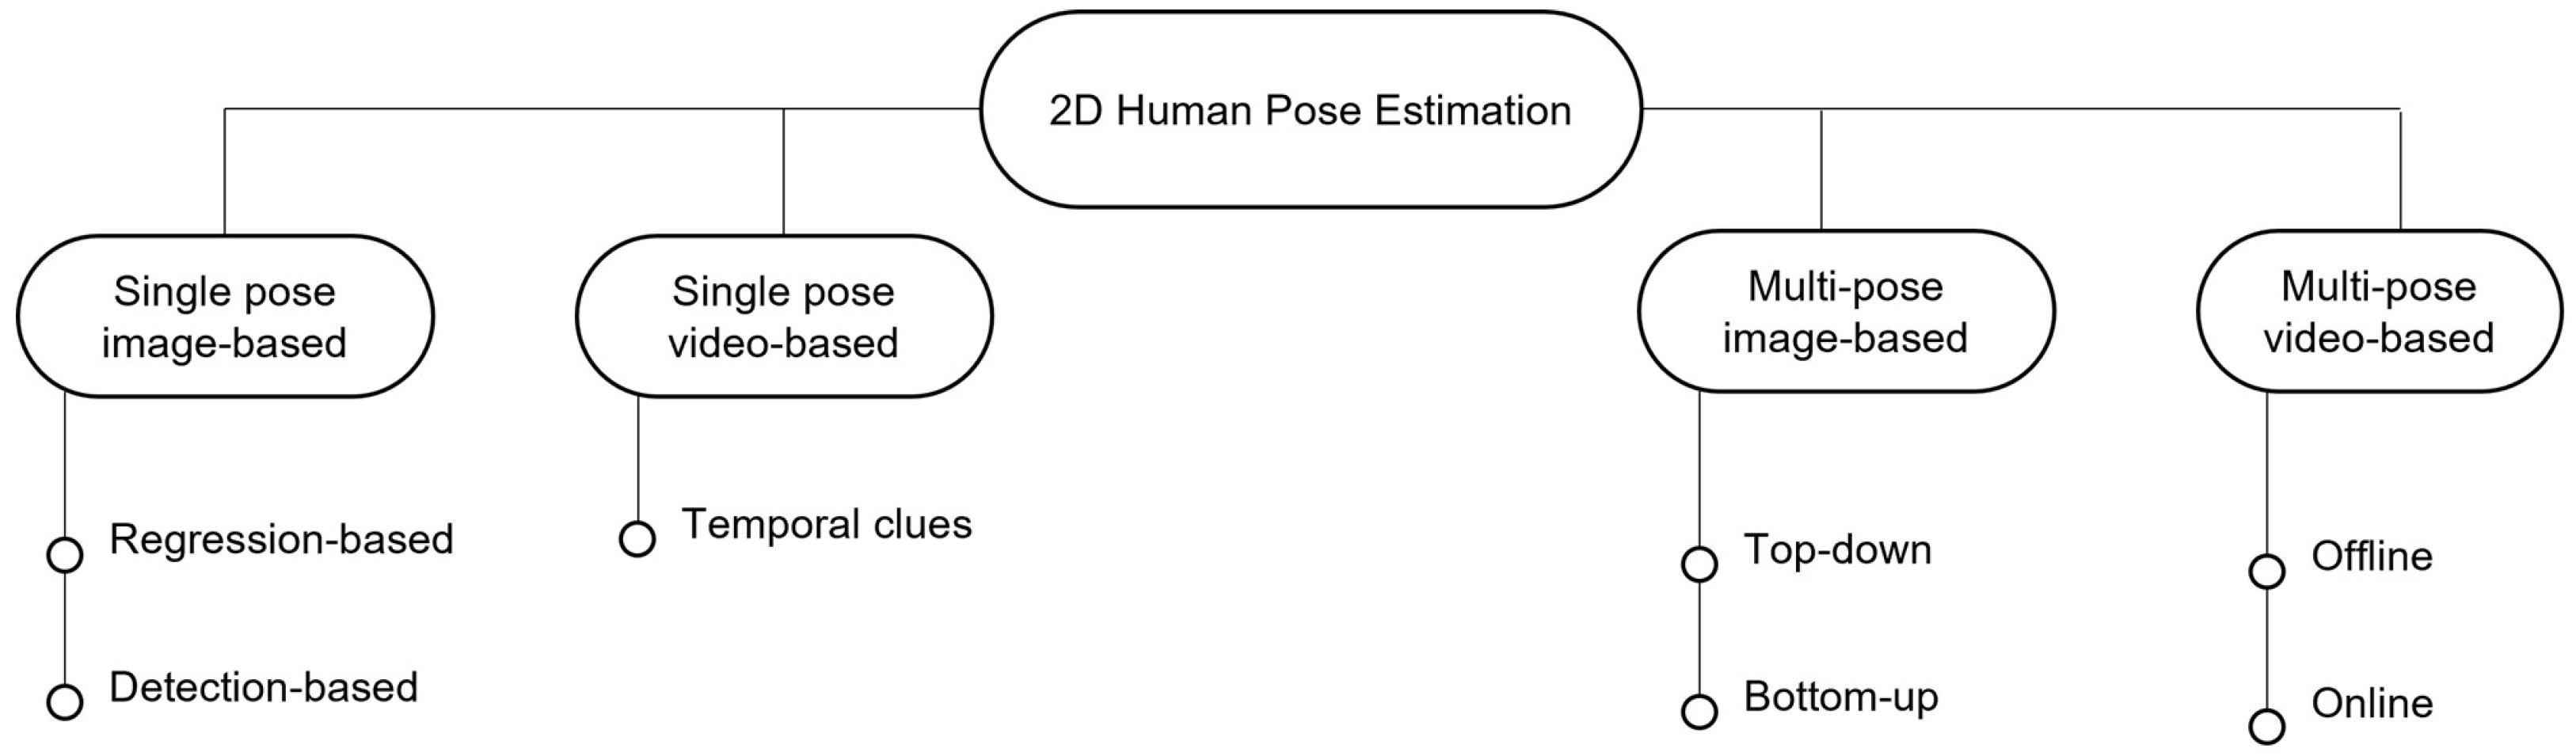 PDF) 3D Human Pose Estimation Via Deep Learning Methods